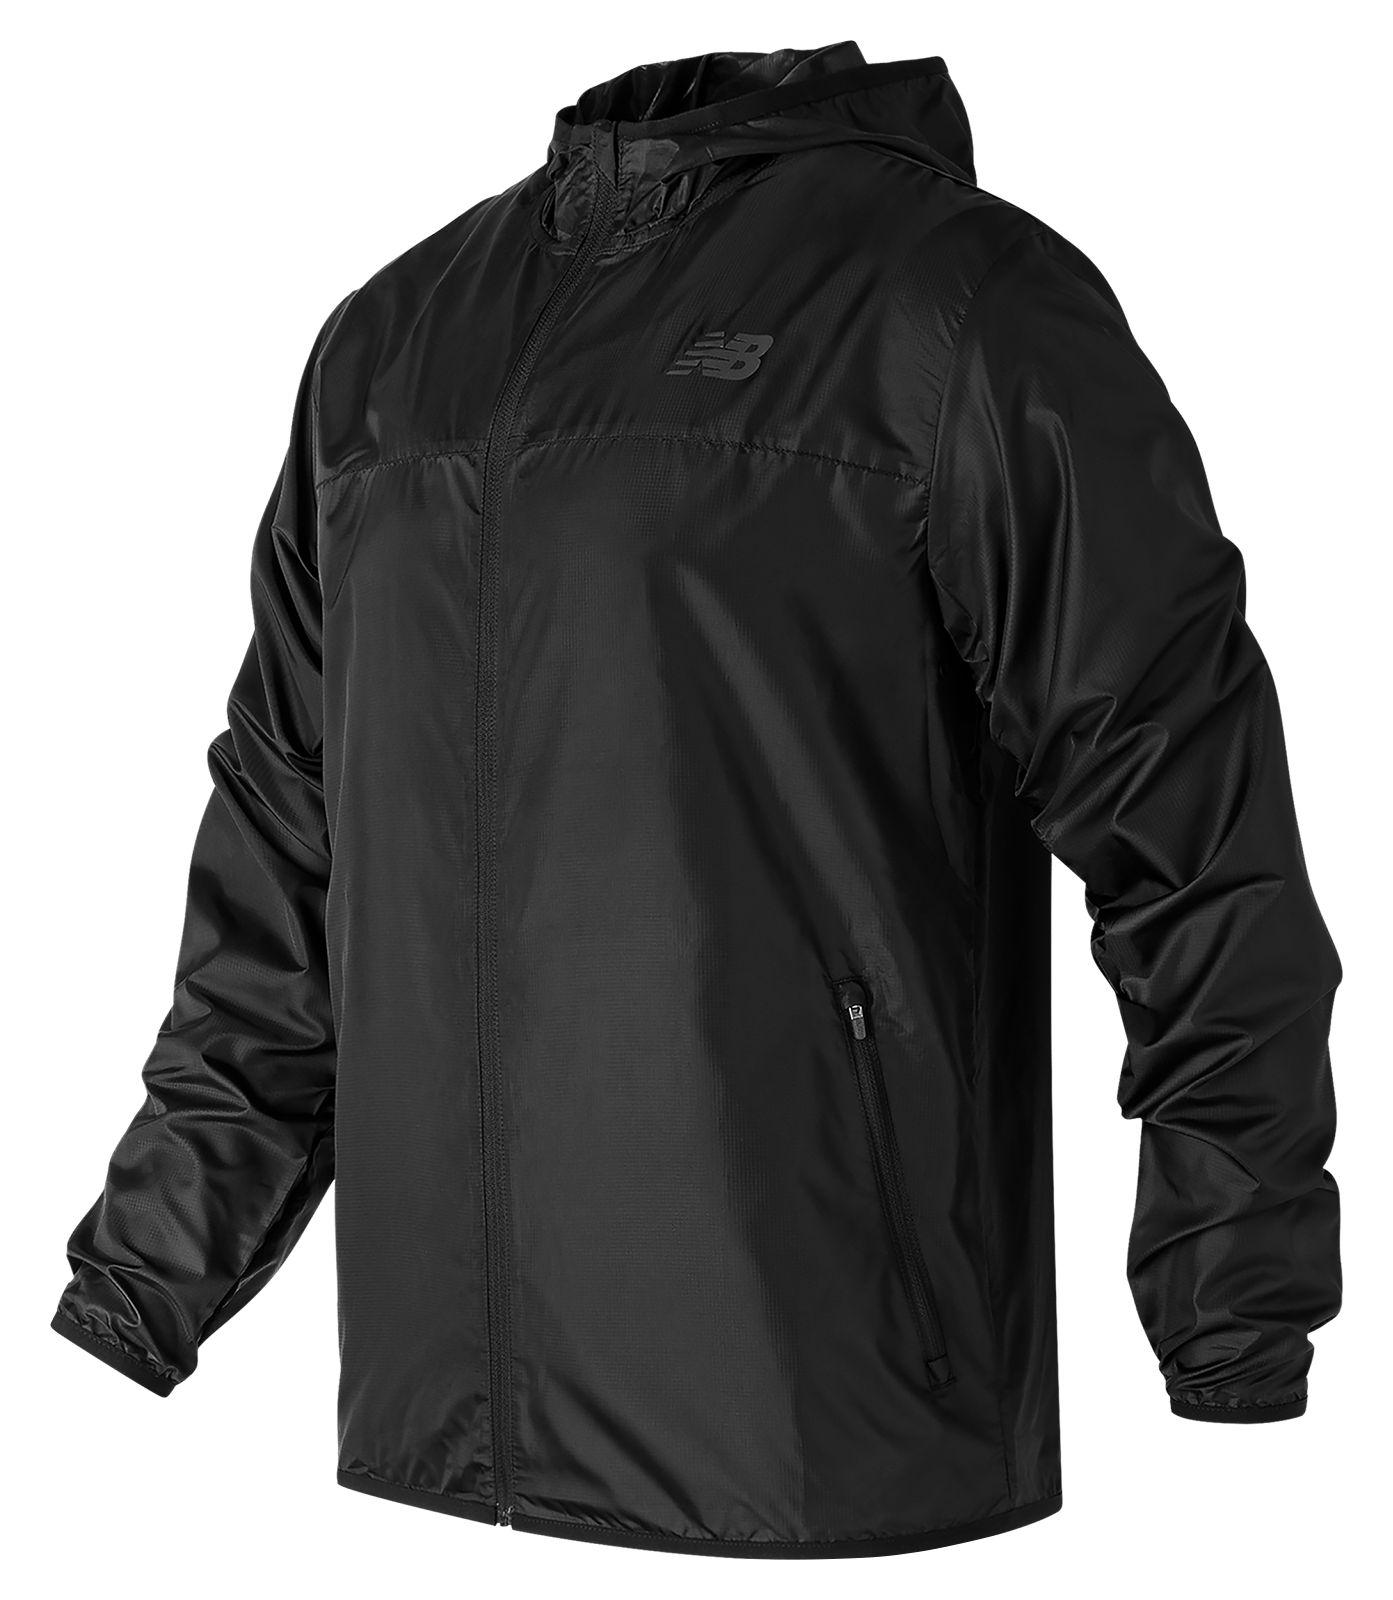 Lyst - New Balance Windcheater Jacket in Black for Men